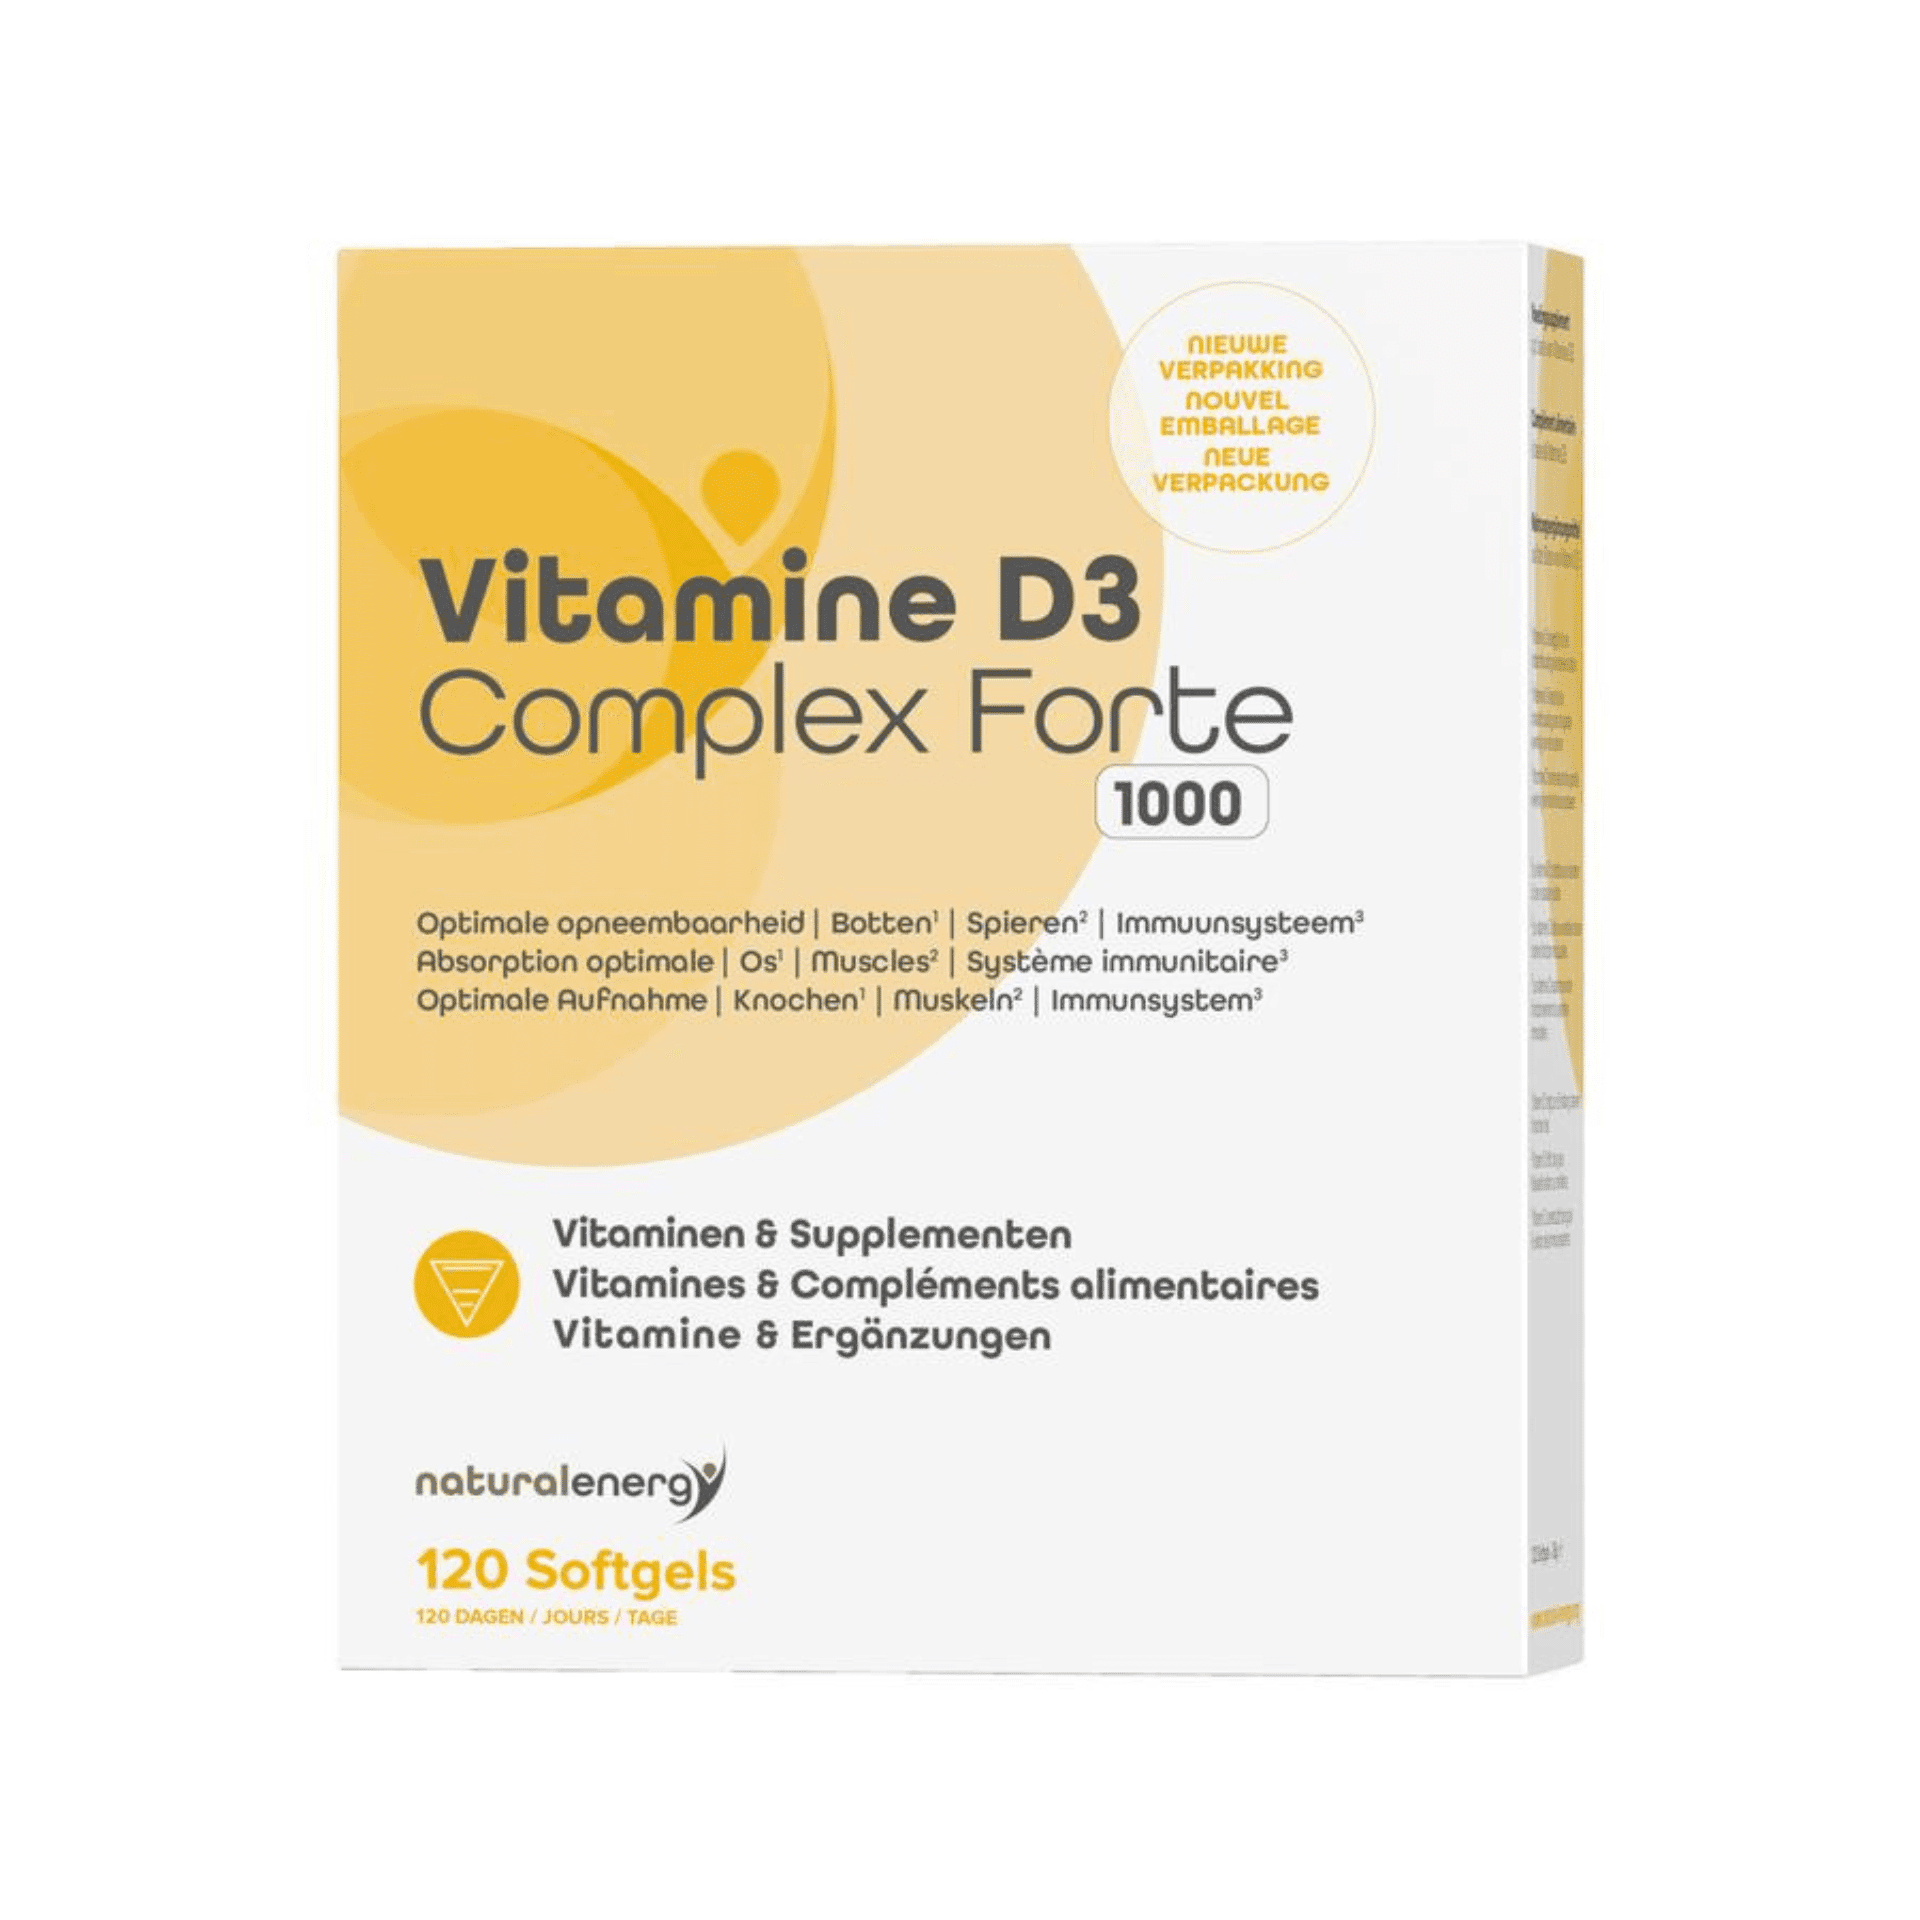 Natural Energy Vitamine D Complex Forte